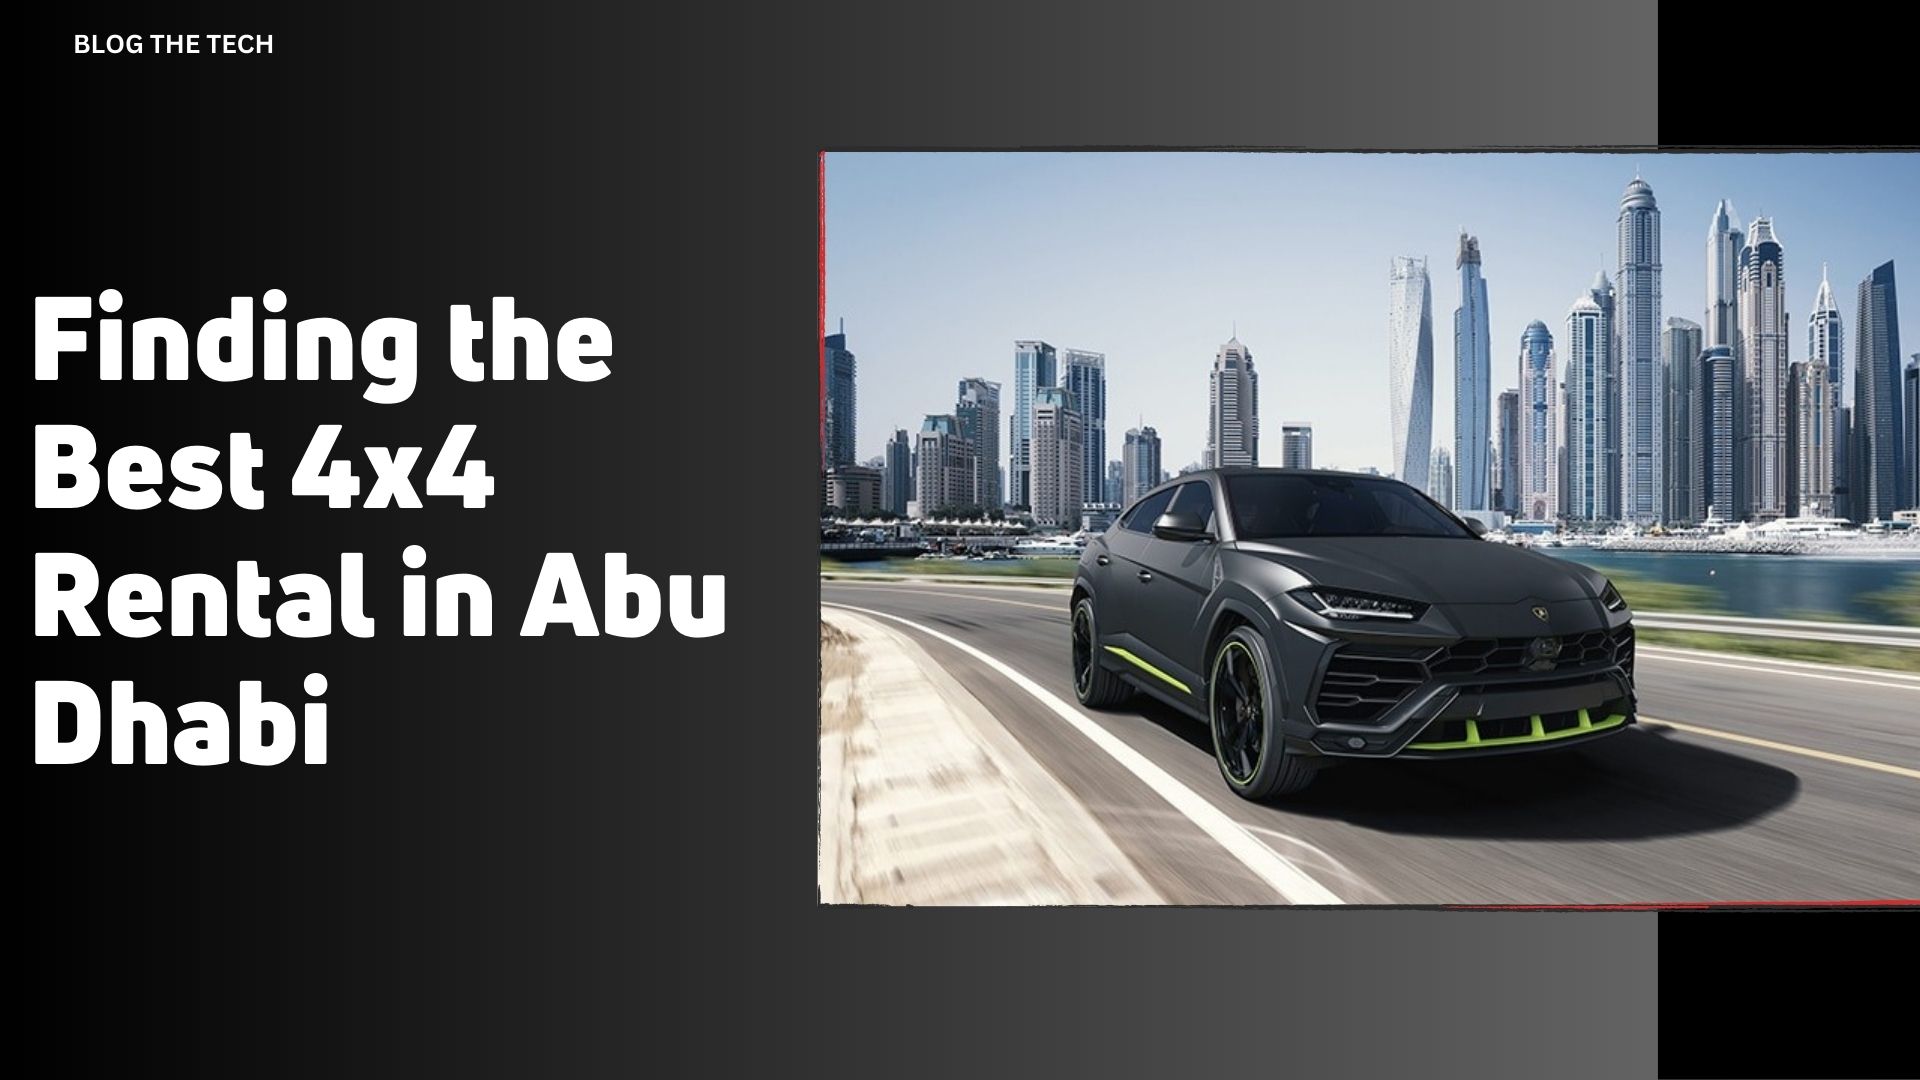 Finding the Best 4x4 Rental in Abu Dhabi